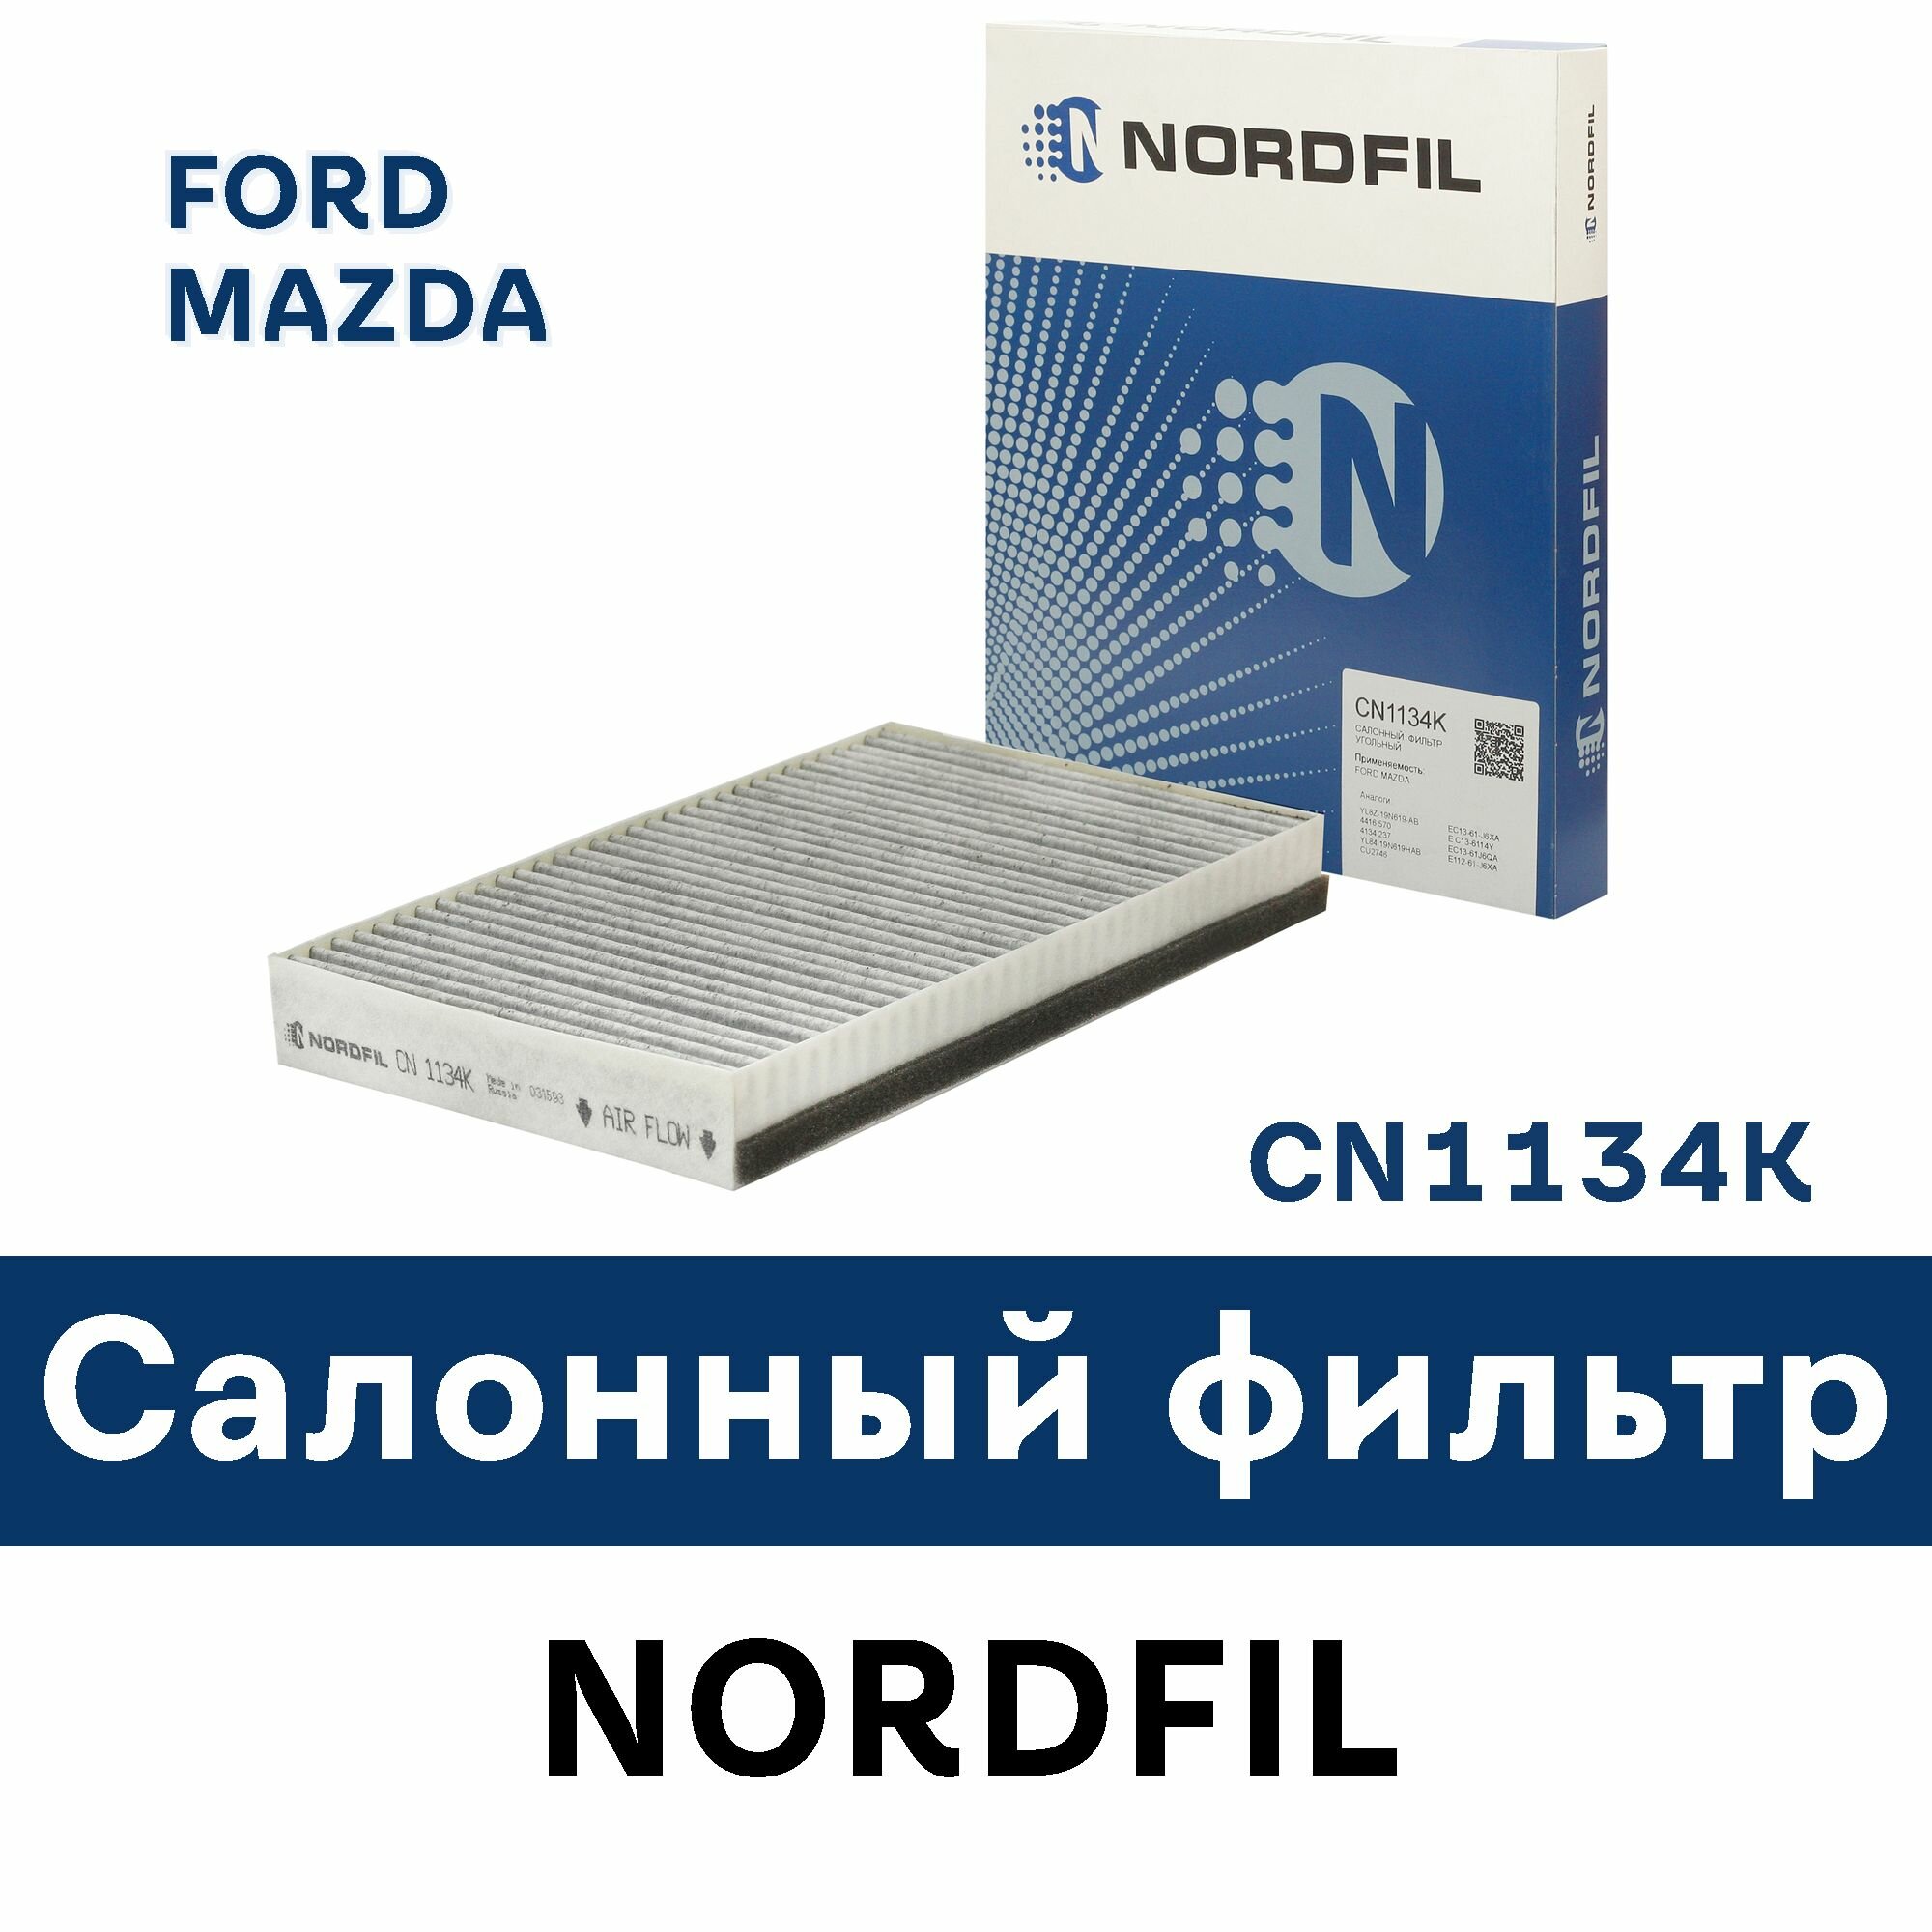 Салонный фильтр для FORD Maverick II, MAZDA Tribute CN1134K NORDFIL